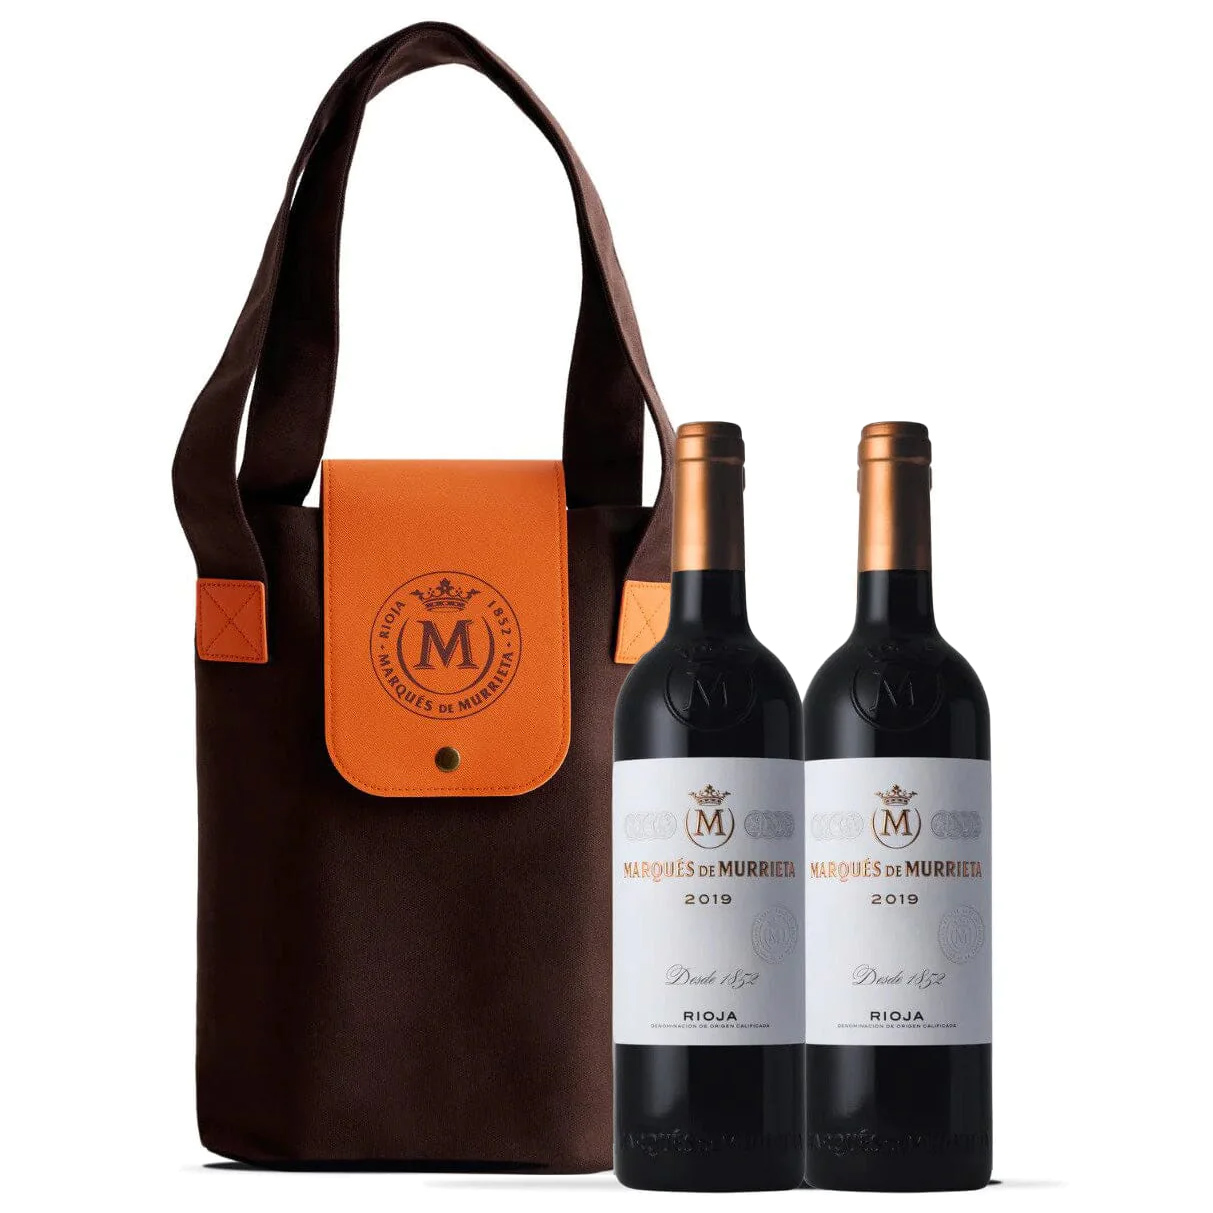 https://www.bottledandboxed.com/images/products/marques-de-murrieta-2-bottle-luxury-bag.jpg